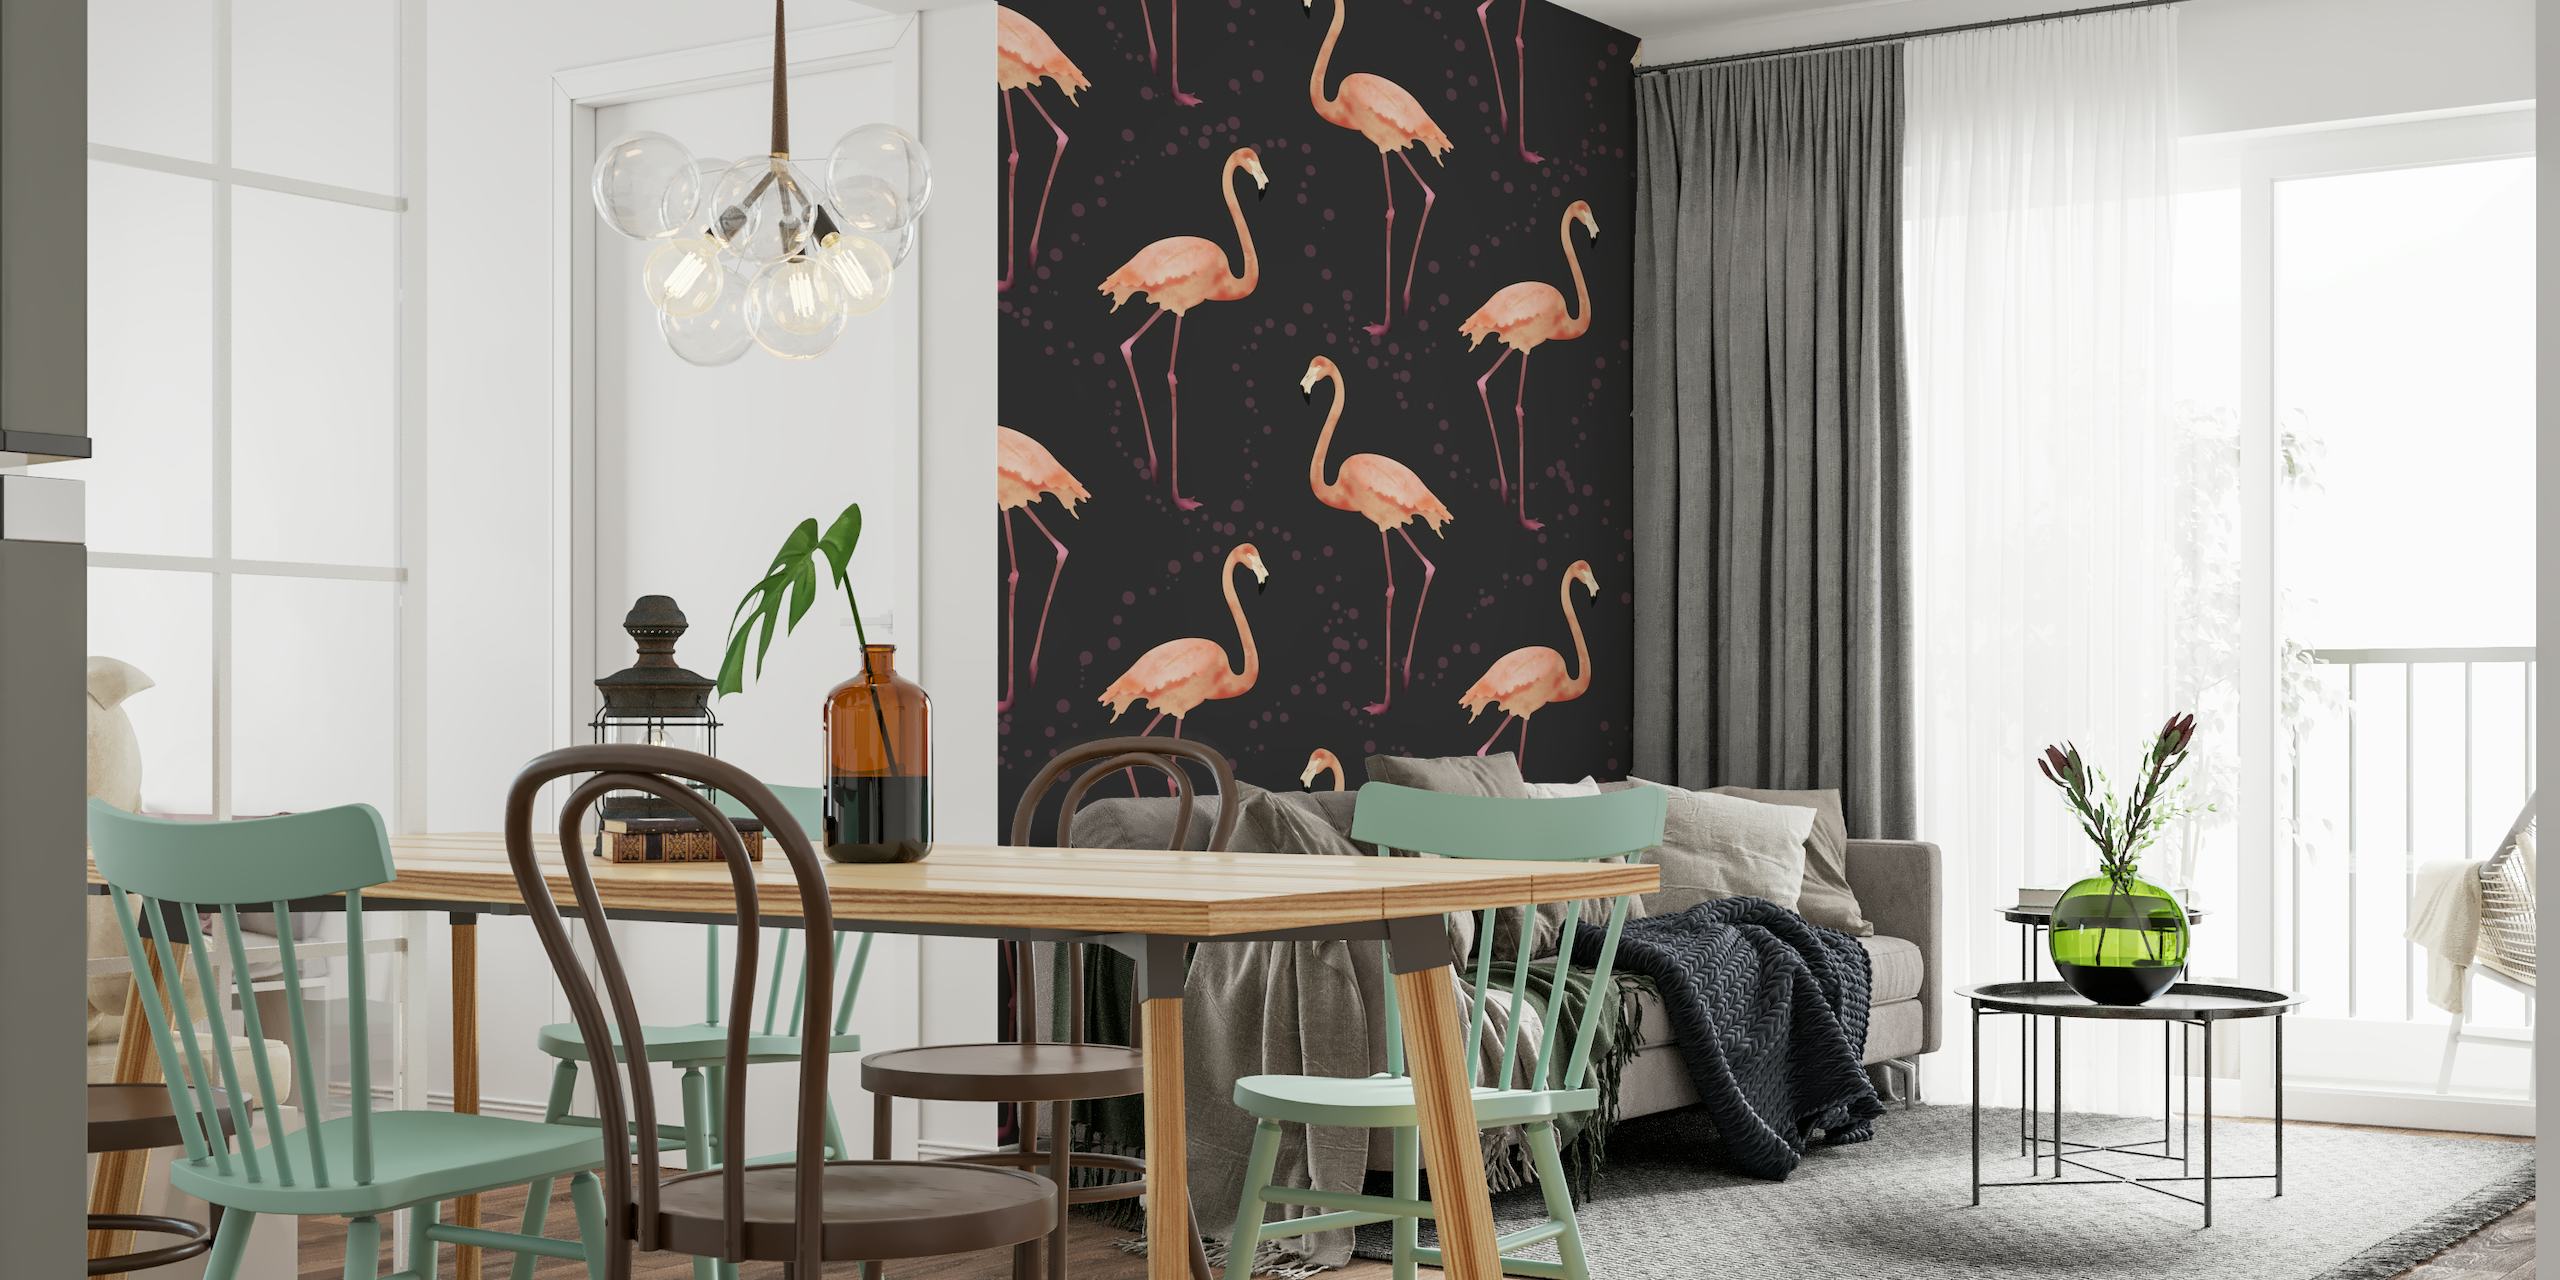 The Flamingo Dance fuchsia tapetit